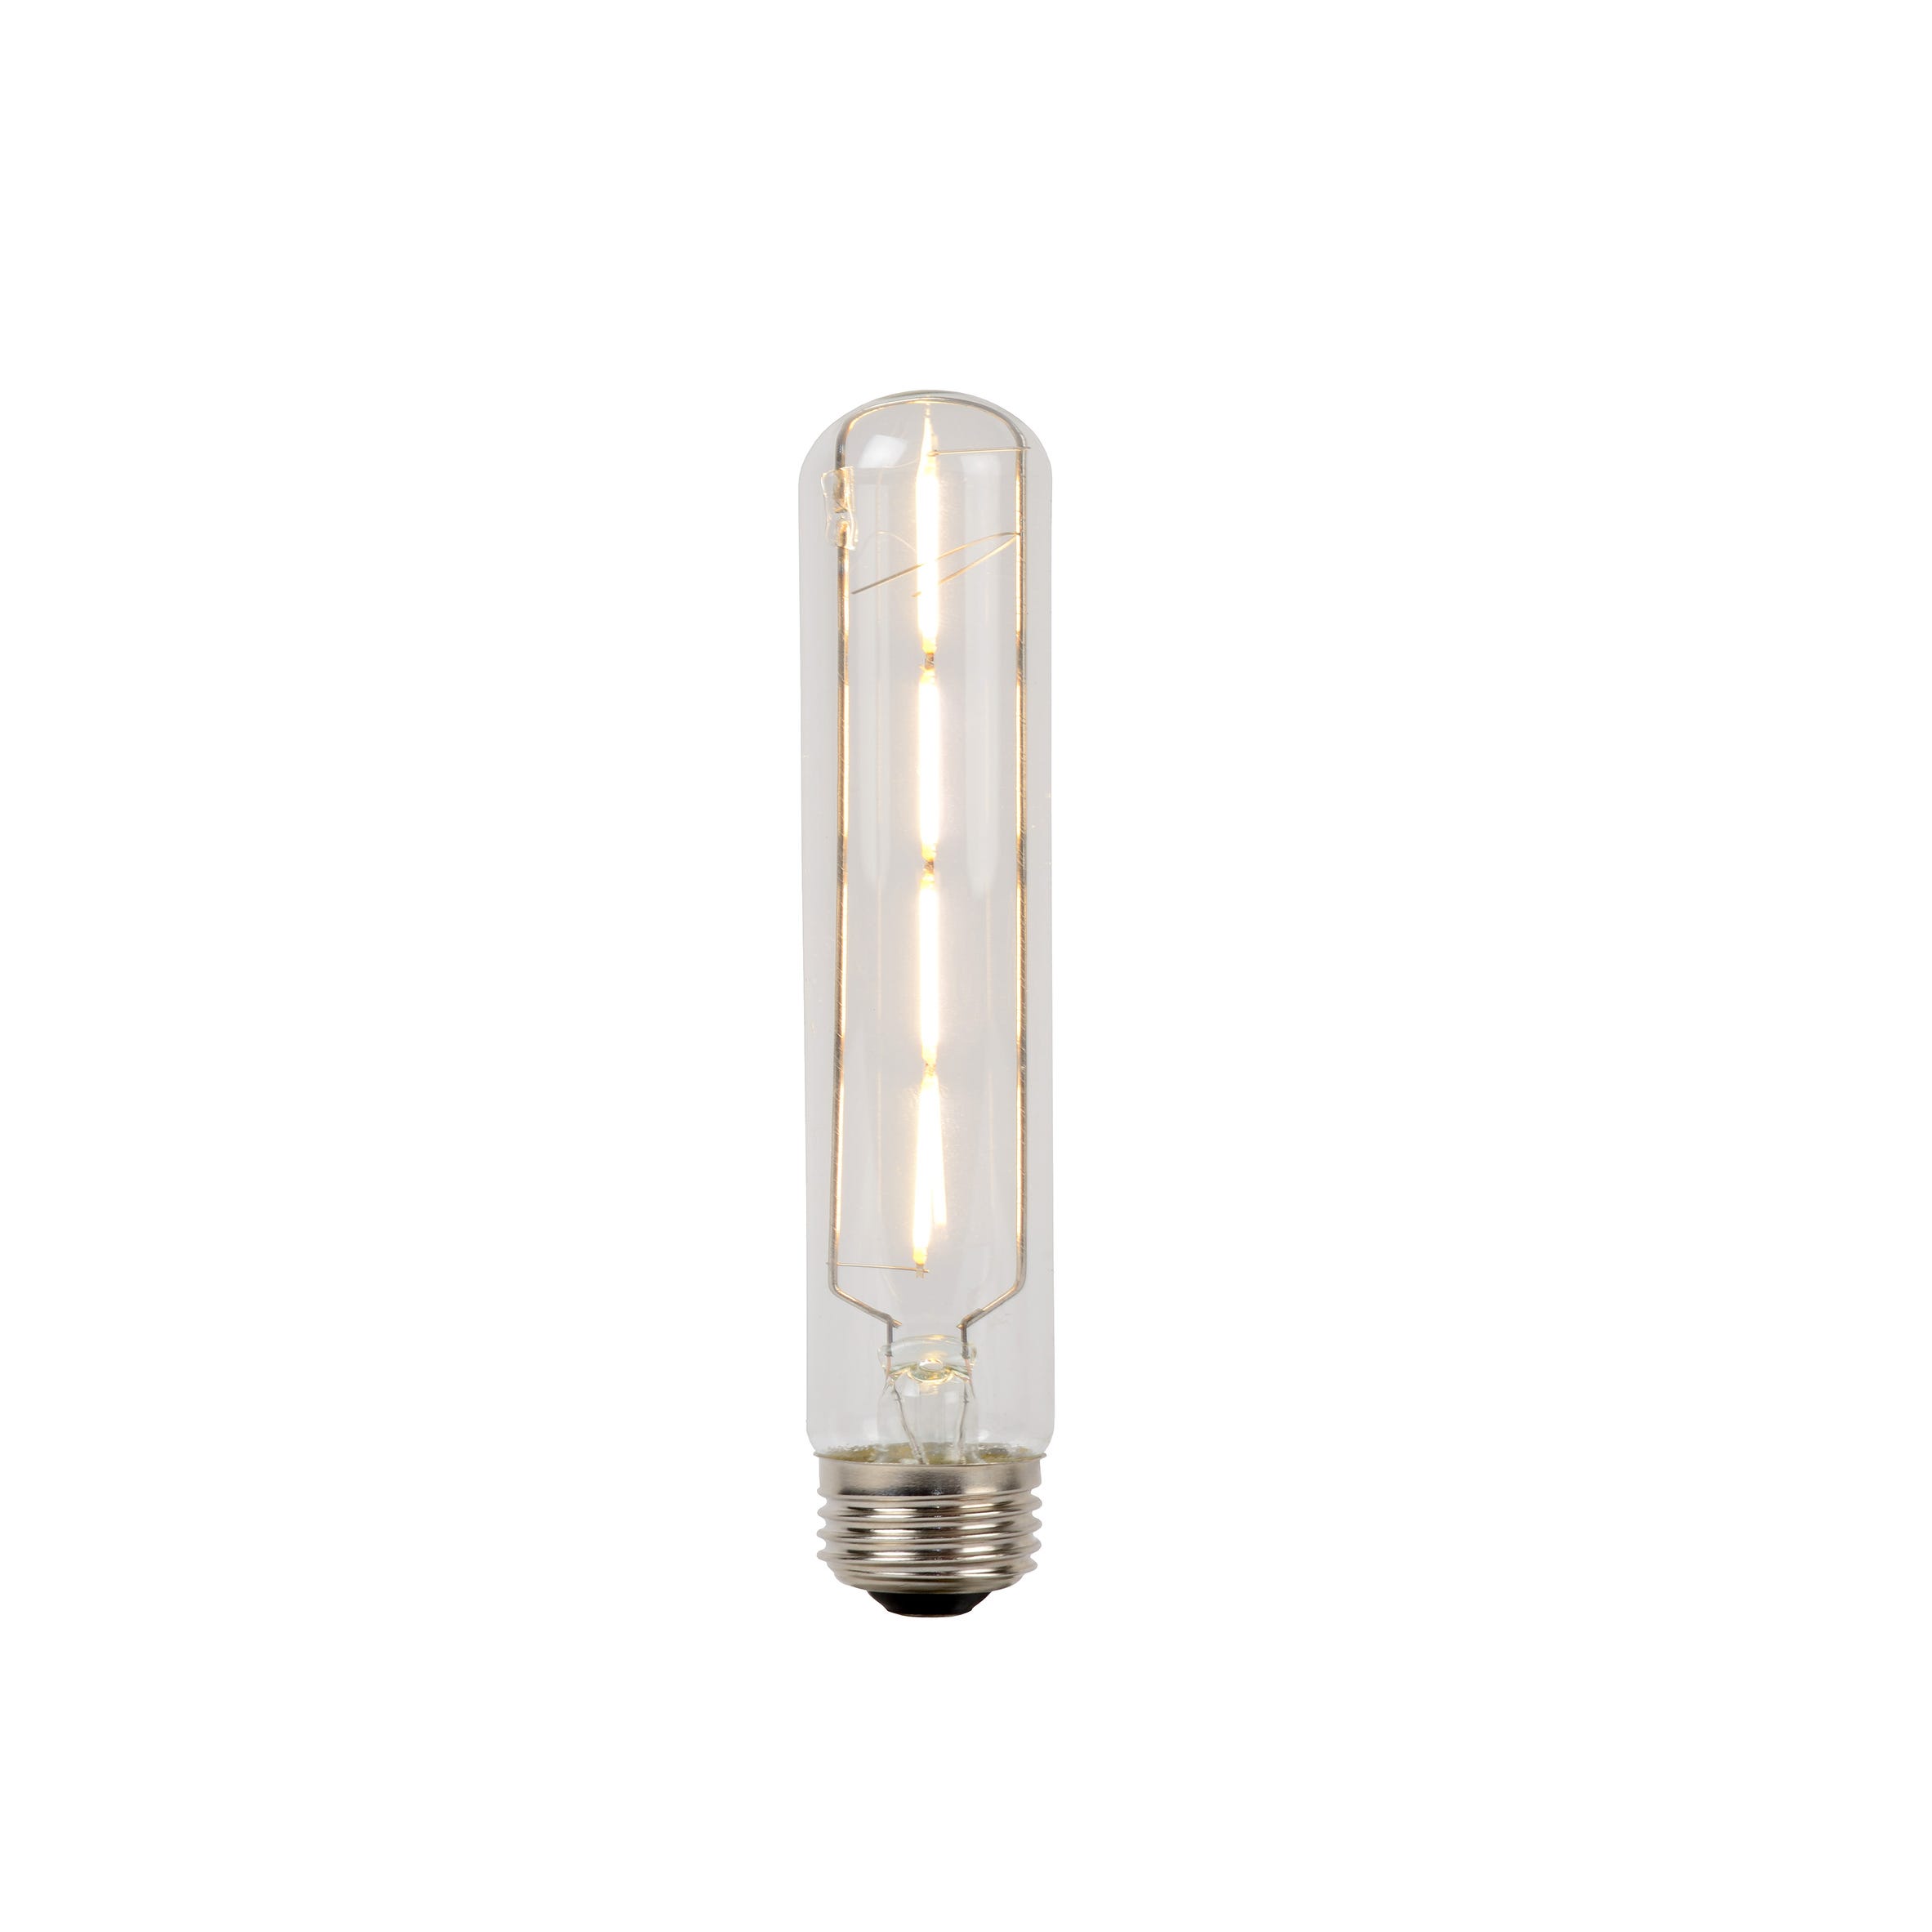 Ampoule à filament, E27, blanc opalin, LED, 2700K, 350lm, Ø9,5cm, H14,7cm -  Zangra